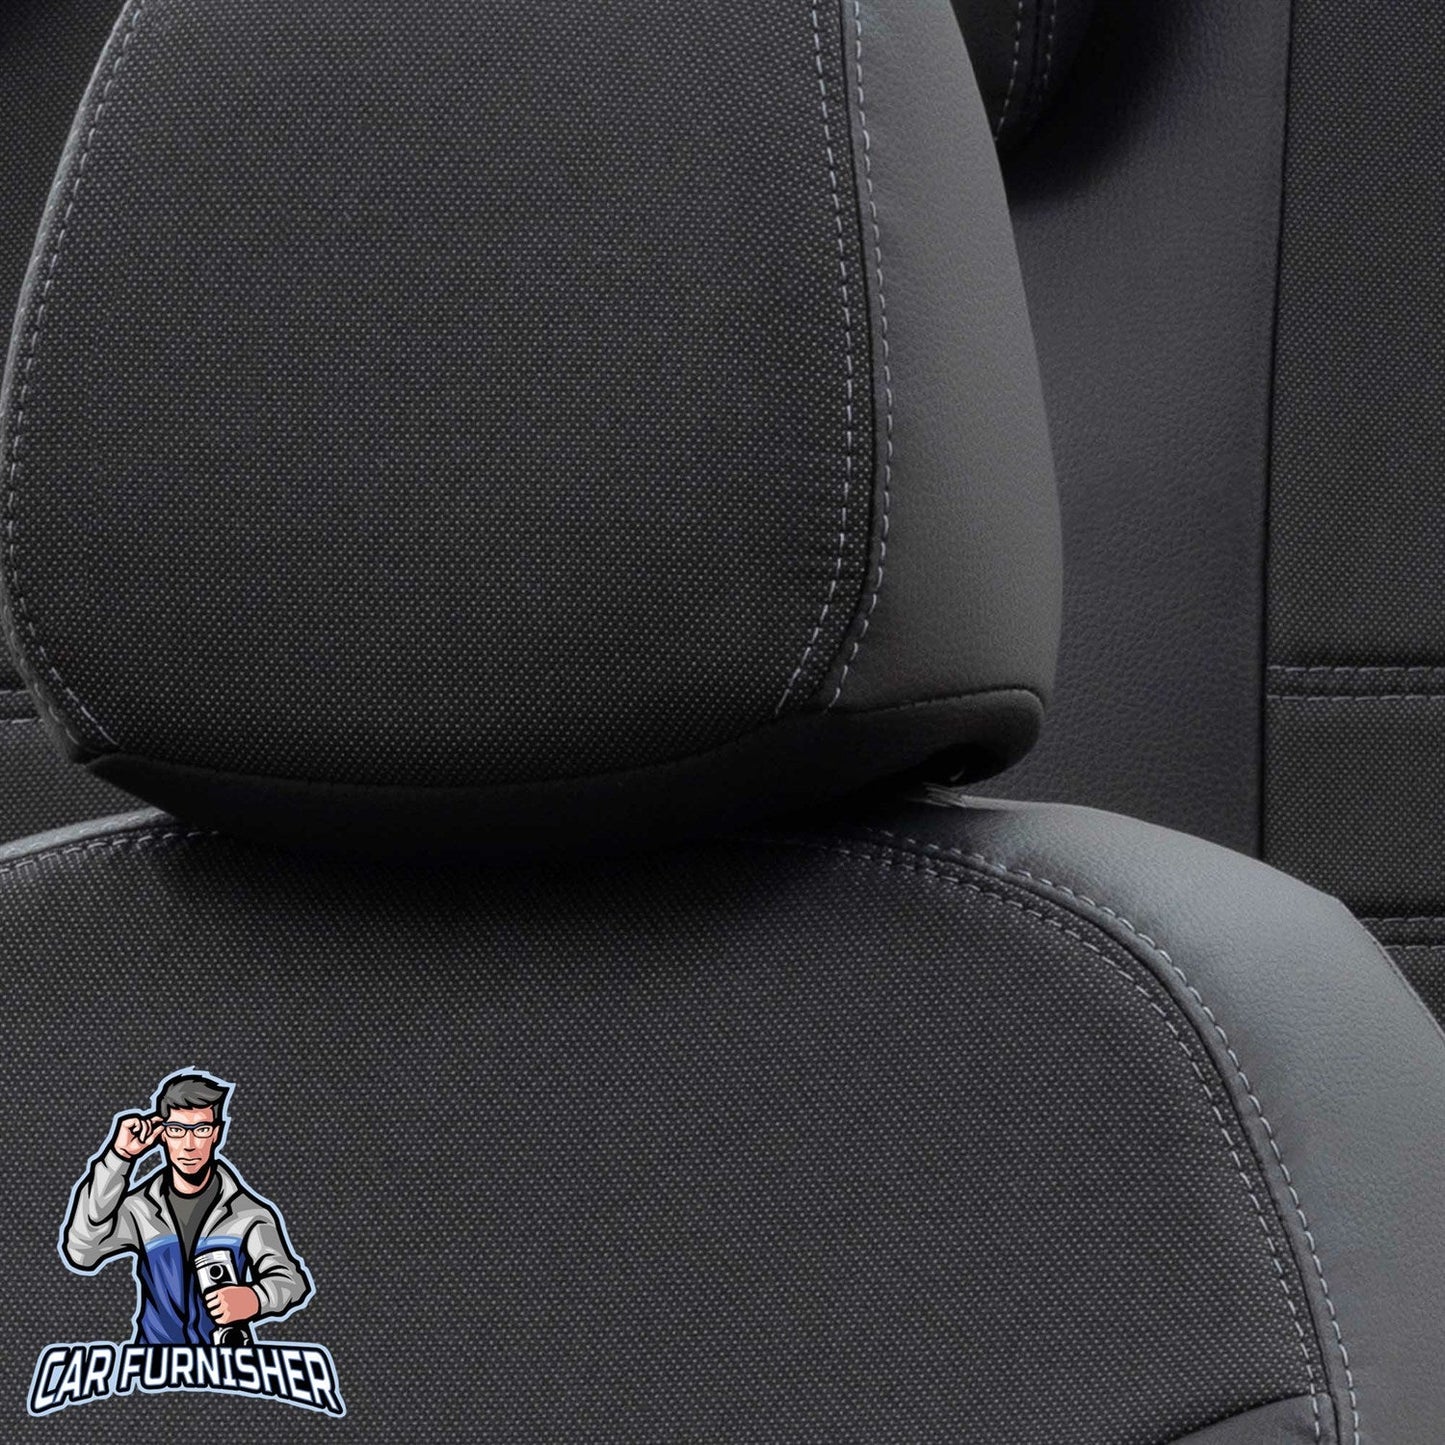 Mini Countryman Seat Covers Paris Leather & Jacquard Design Black Leather & Jacquard Fabric